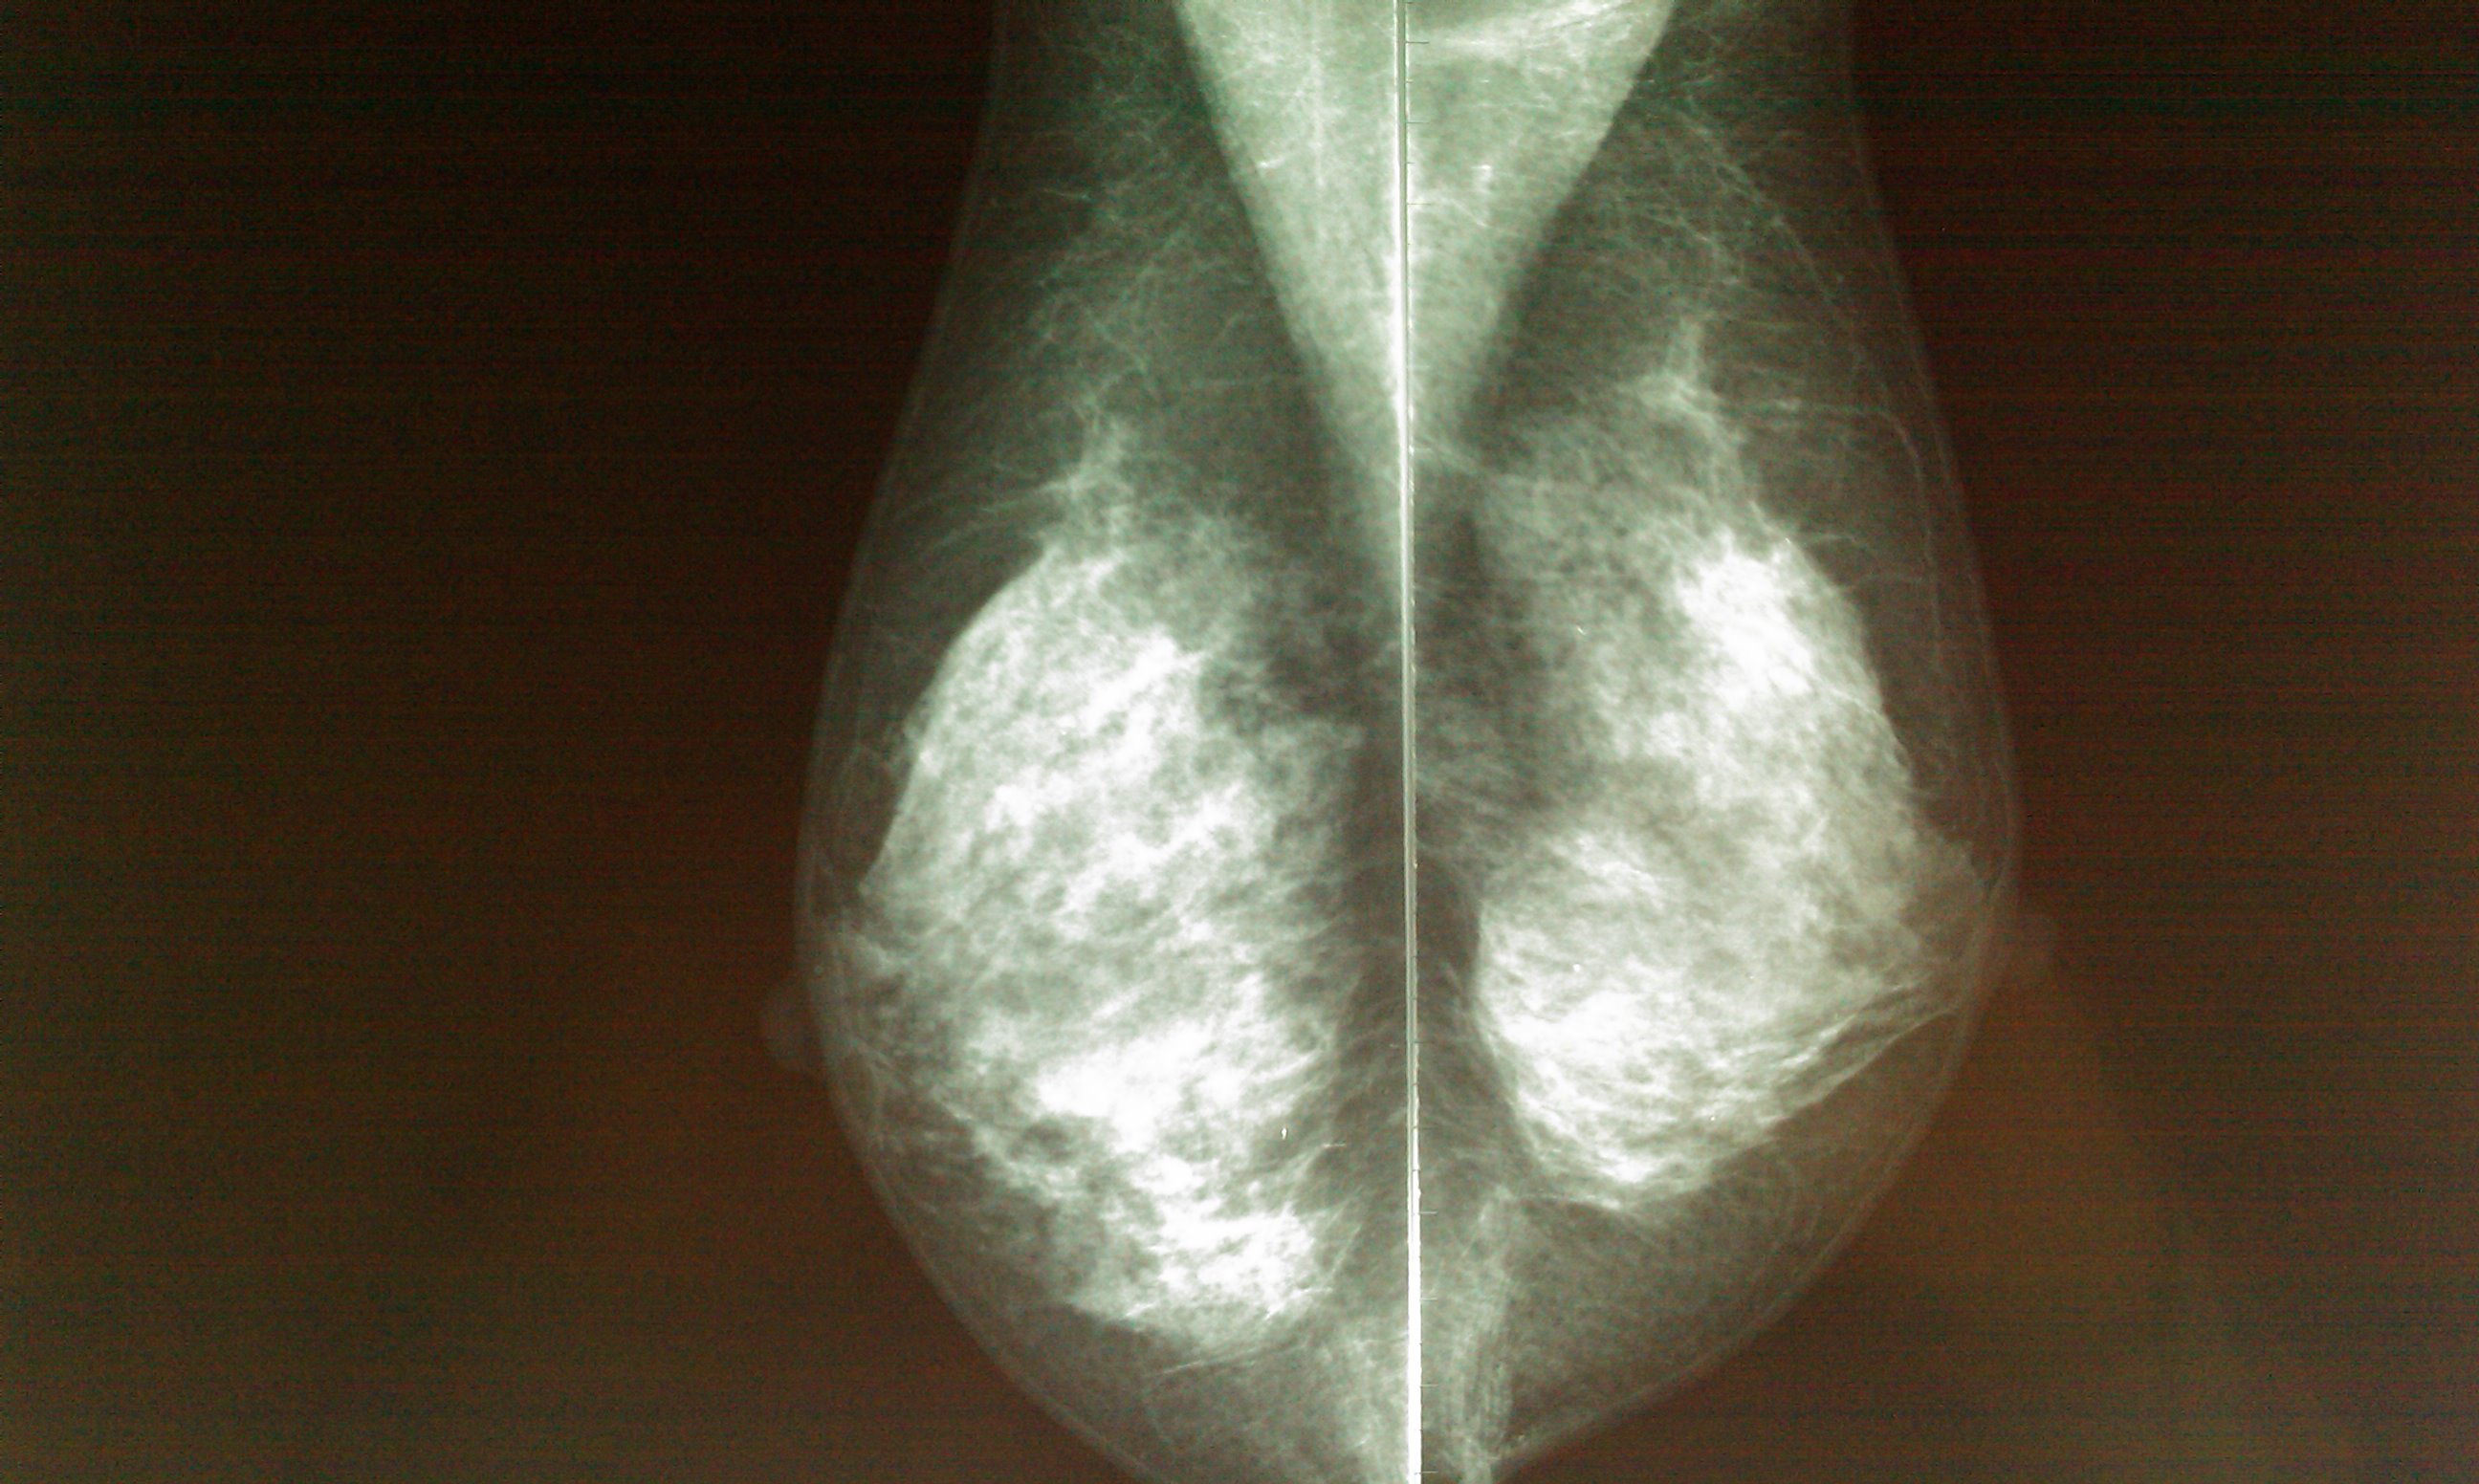 Mamografa NORMAL